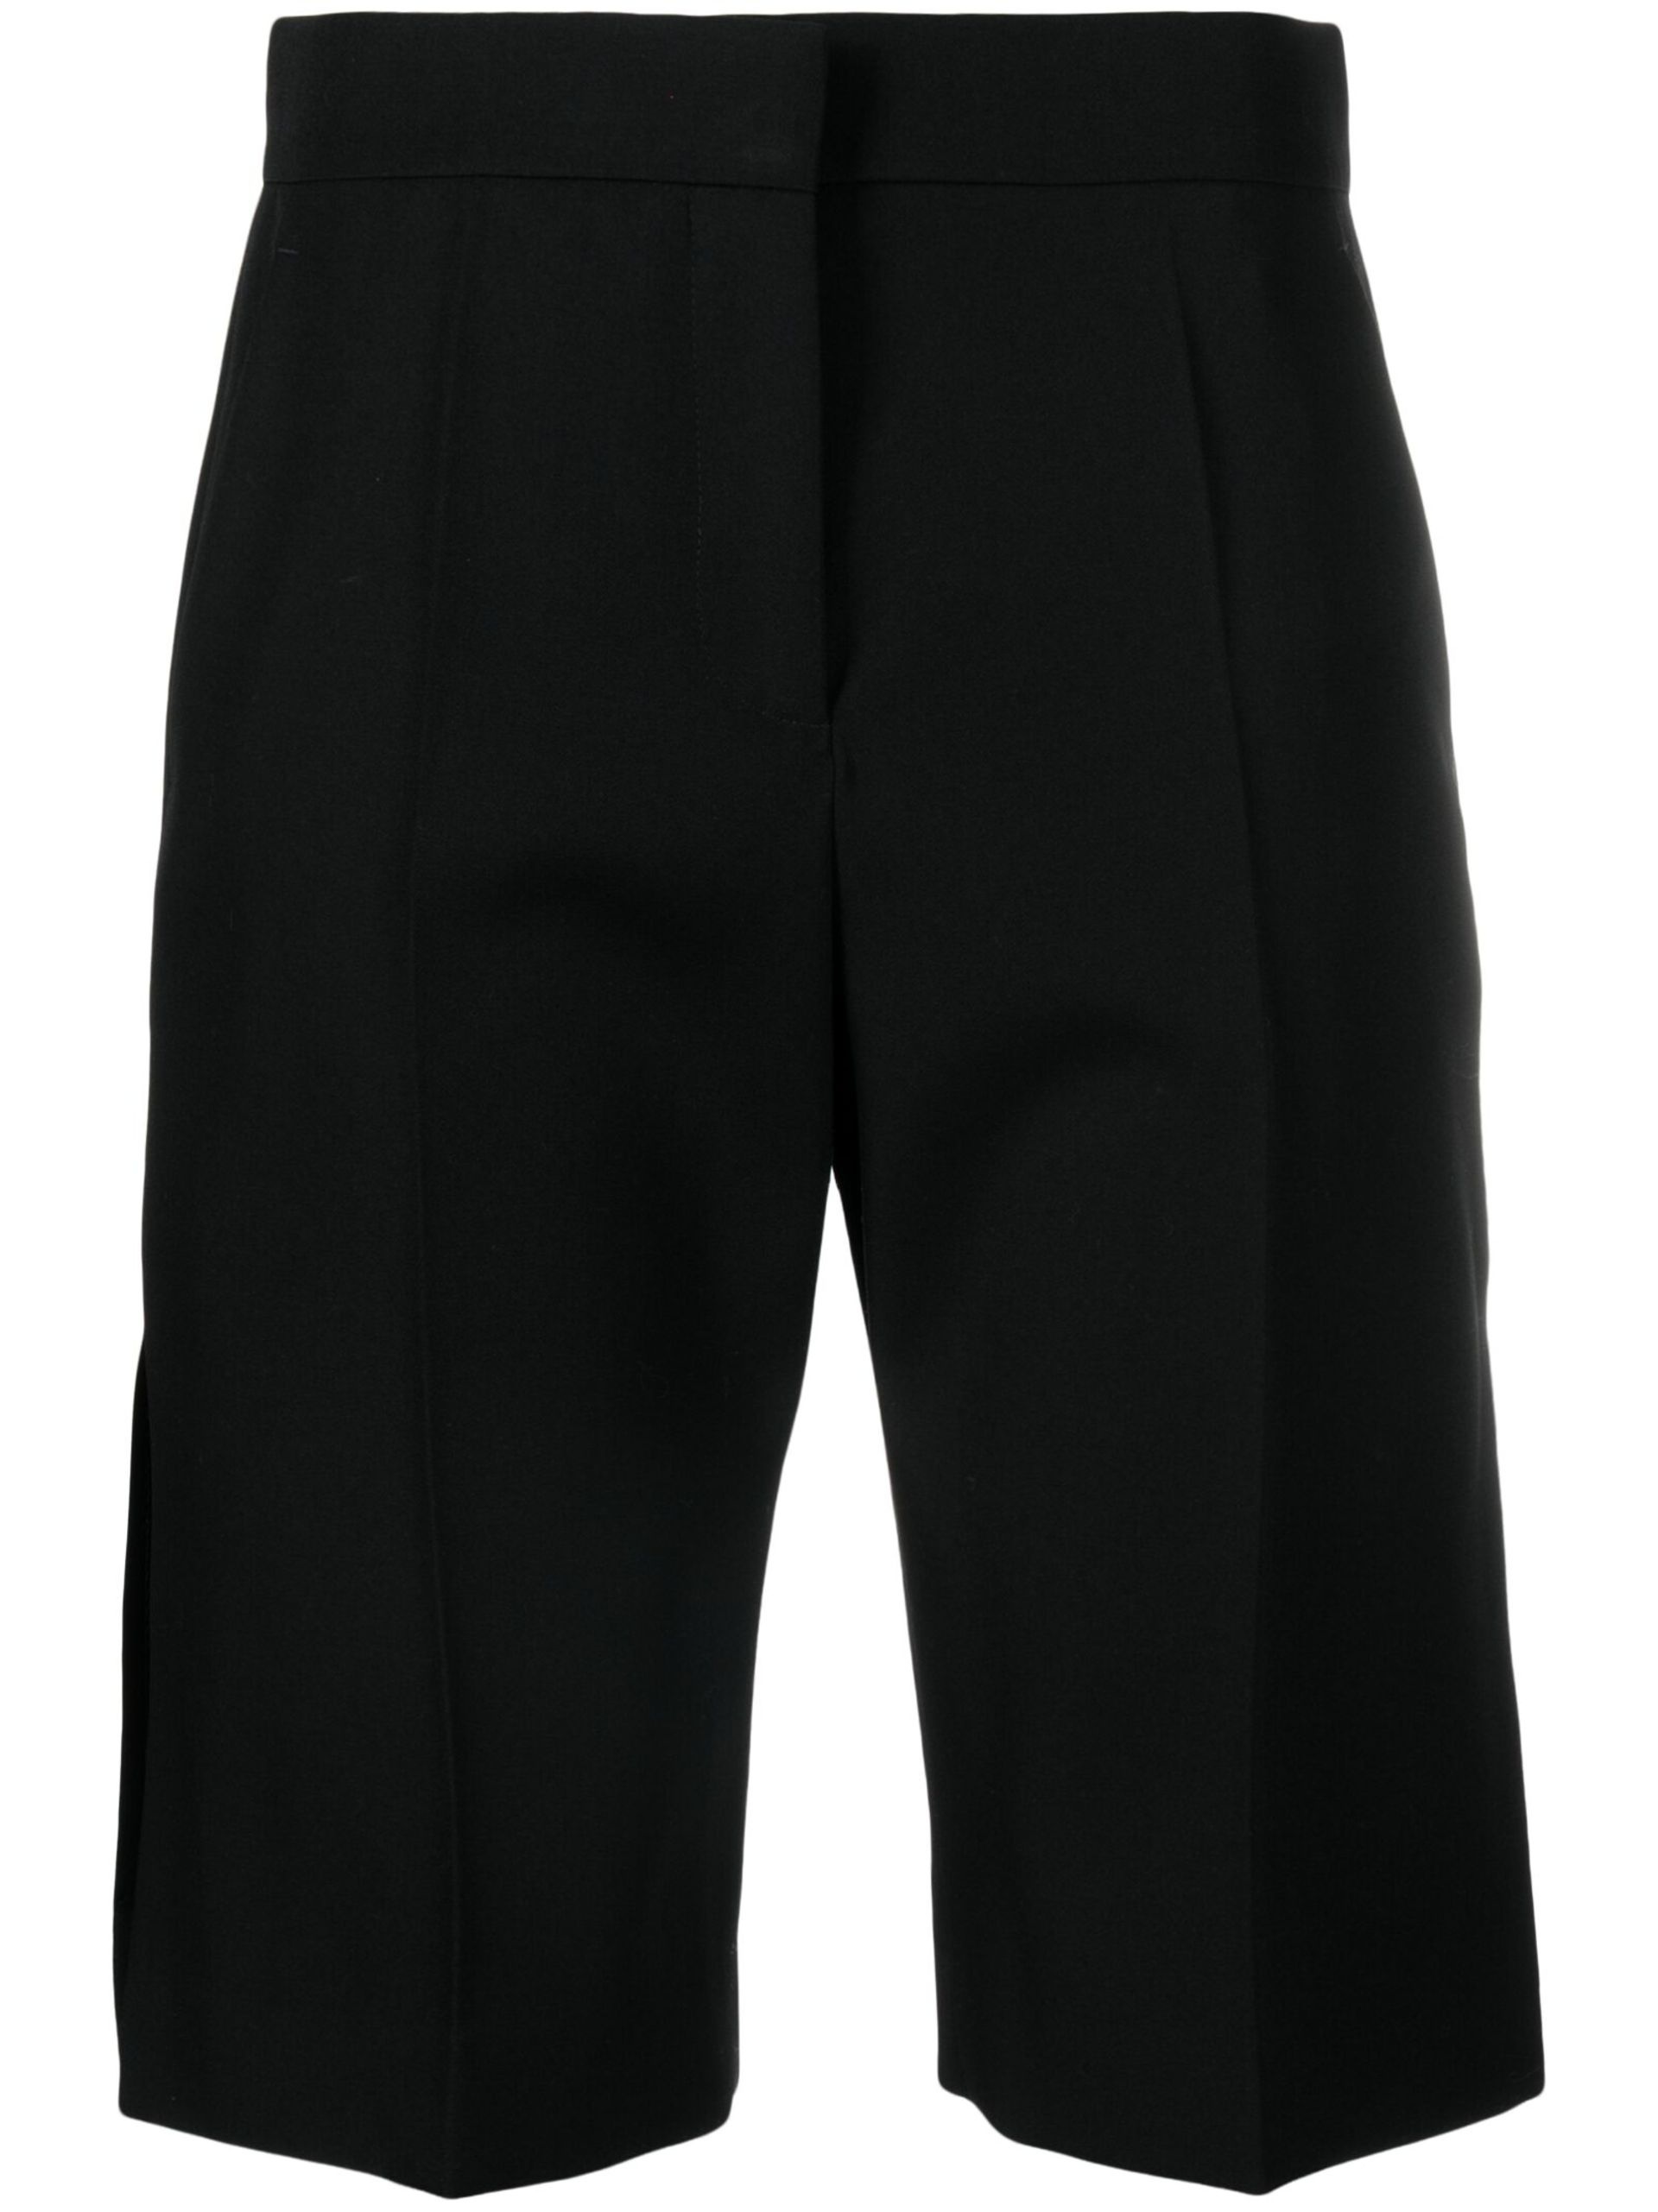 Black Tailored Wool Shorts - 1